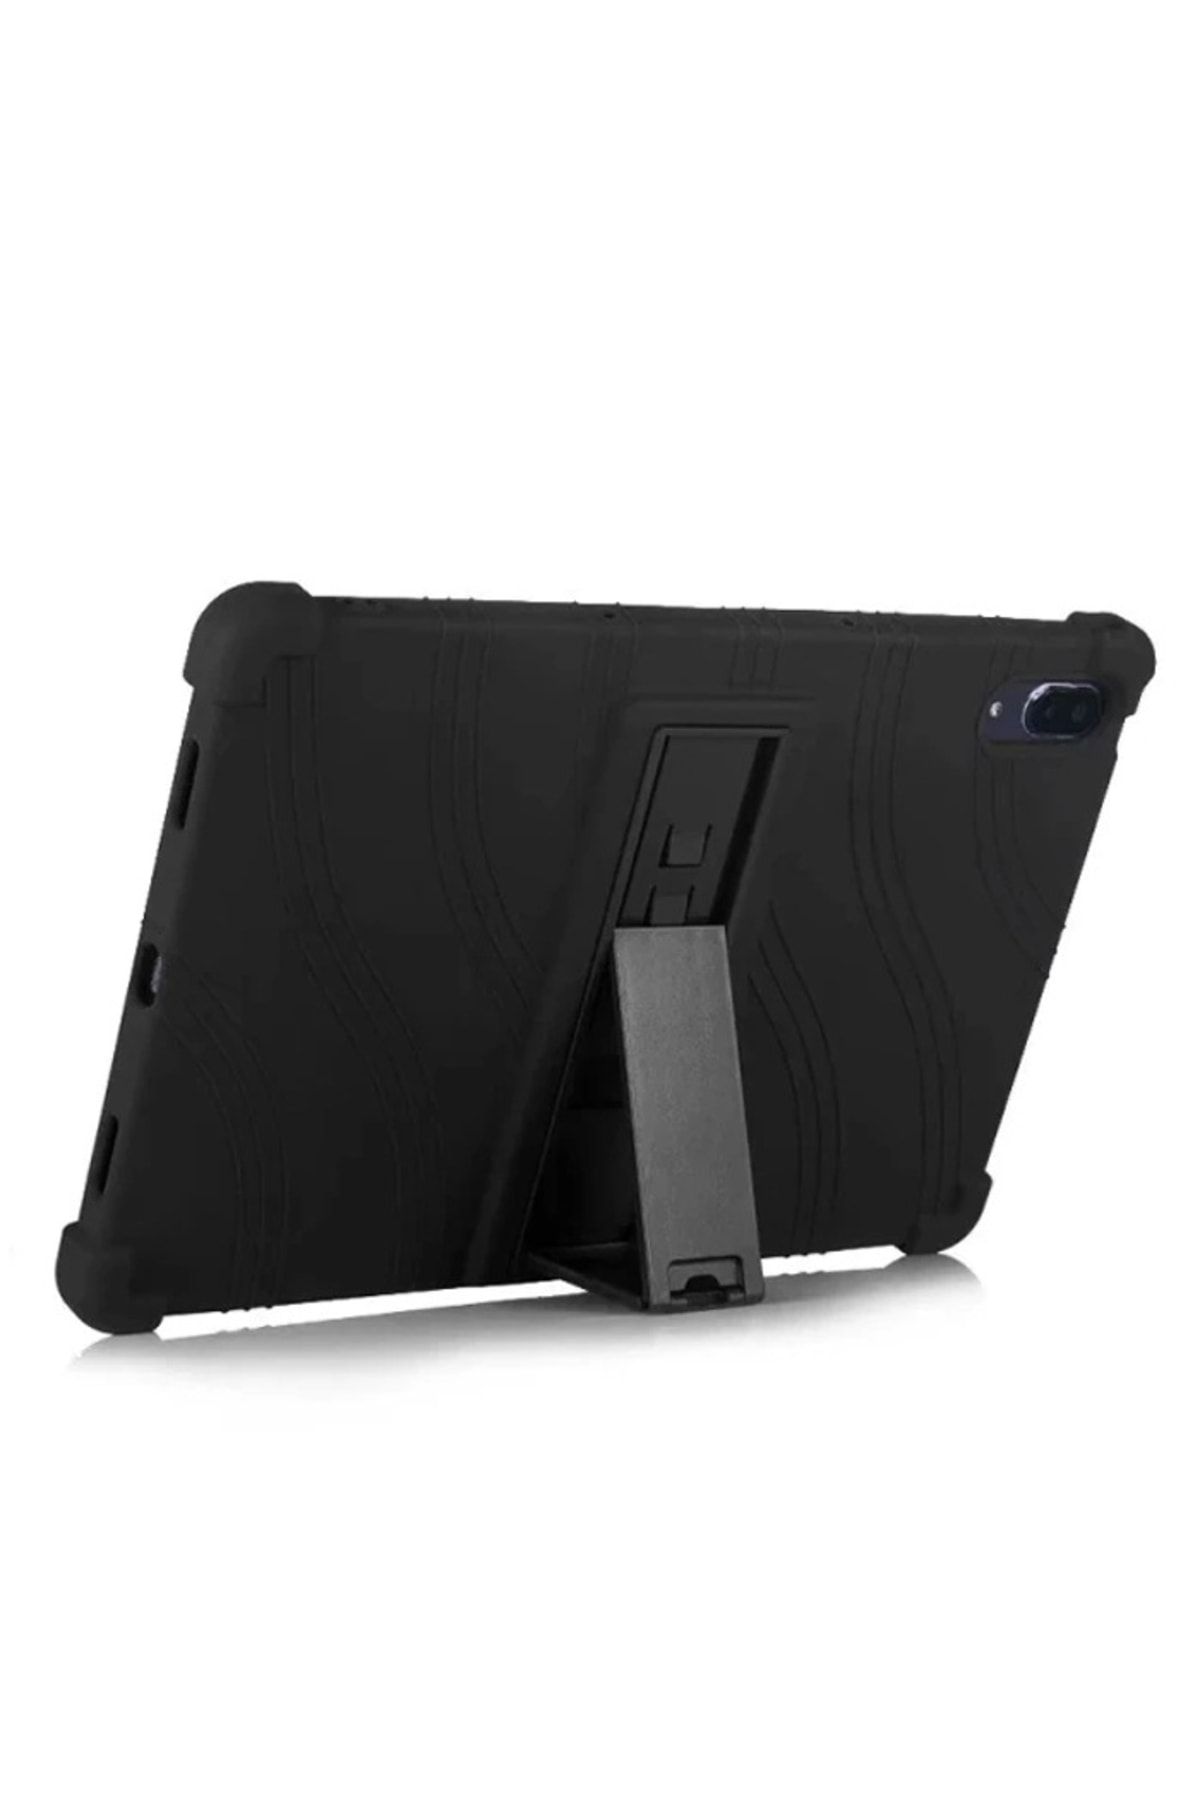 Ally Mobile Ally Lenovo Tab P11 Tb-j606n Standlı Silikon Kılıf Tablet Kılıfı Siyah